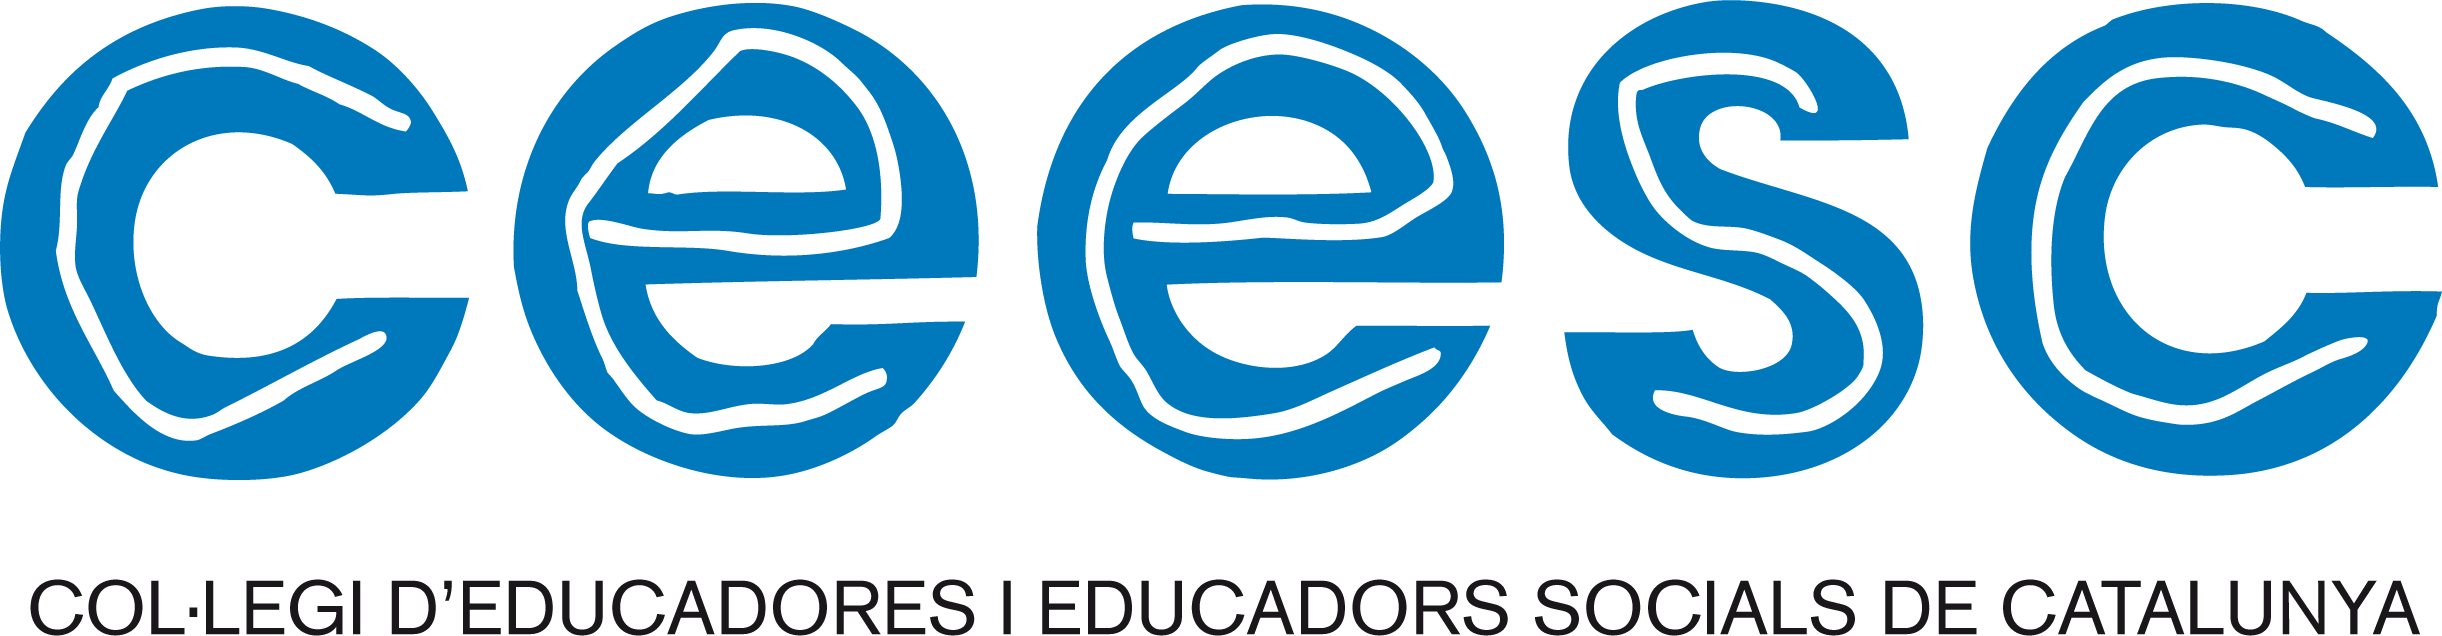 CEESC logo